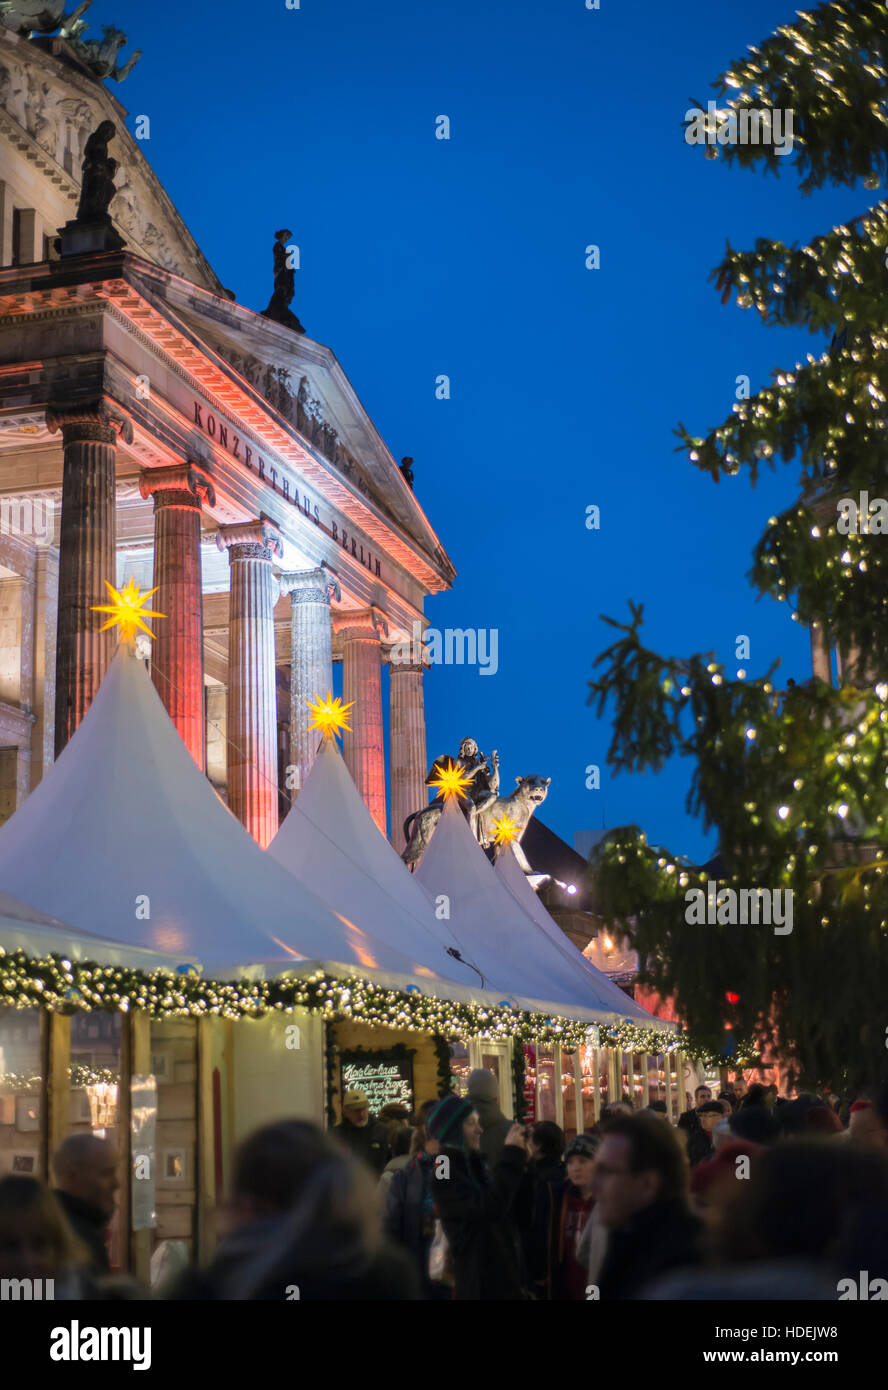 The Christmas market at the Gendarmenmarkt in Berlin, Germany Stock Photo